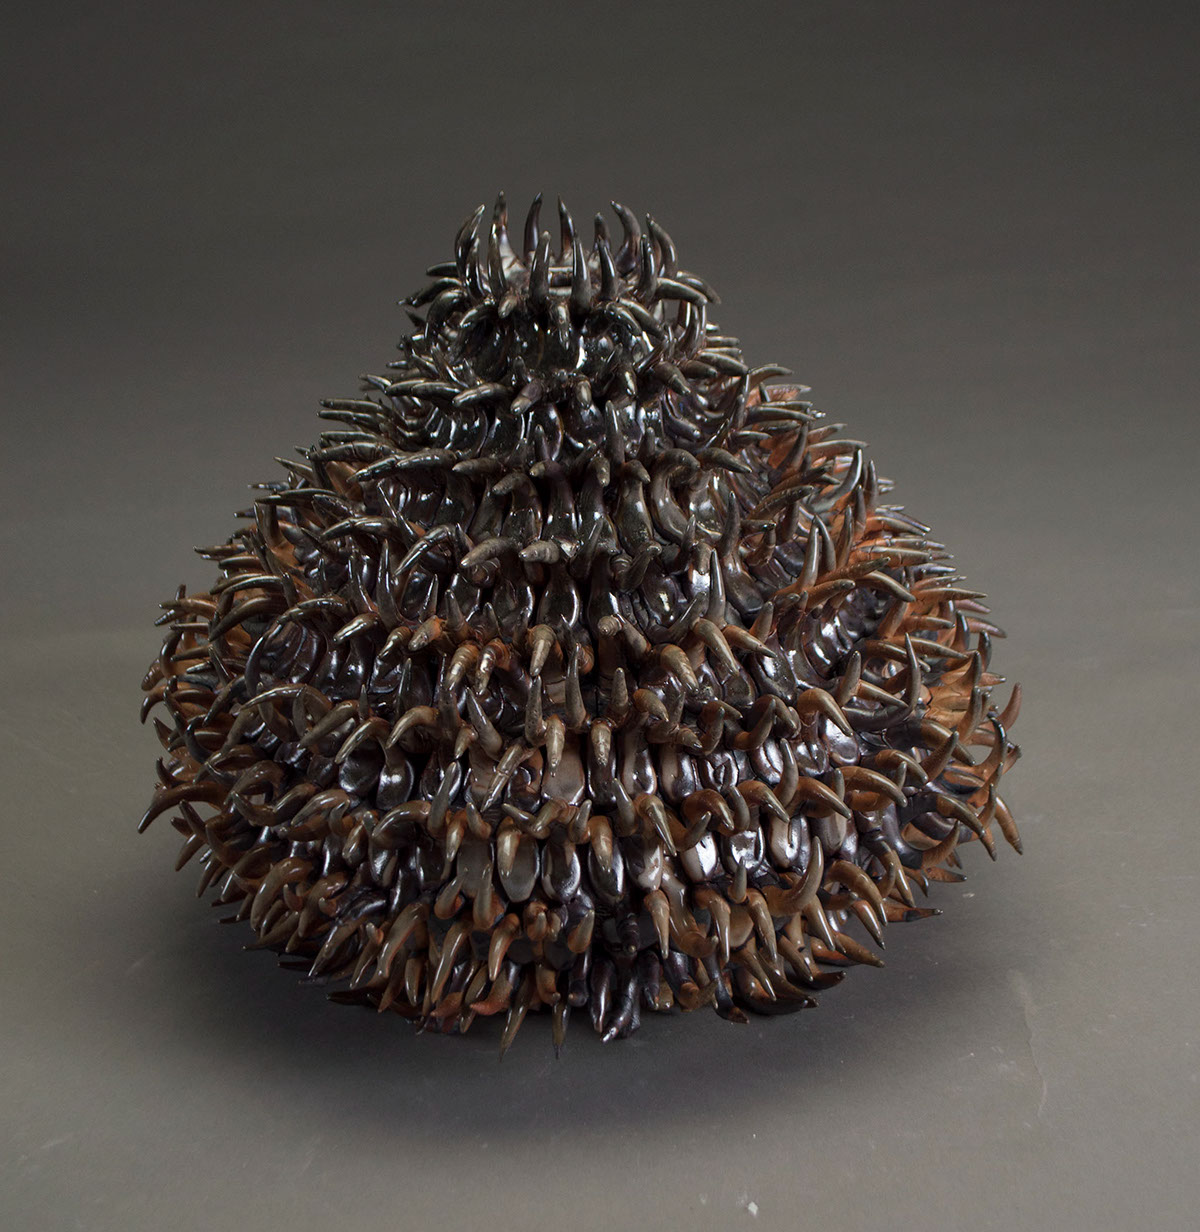 ceramics  sculpture craft WoodFire